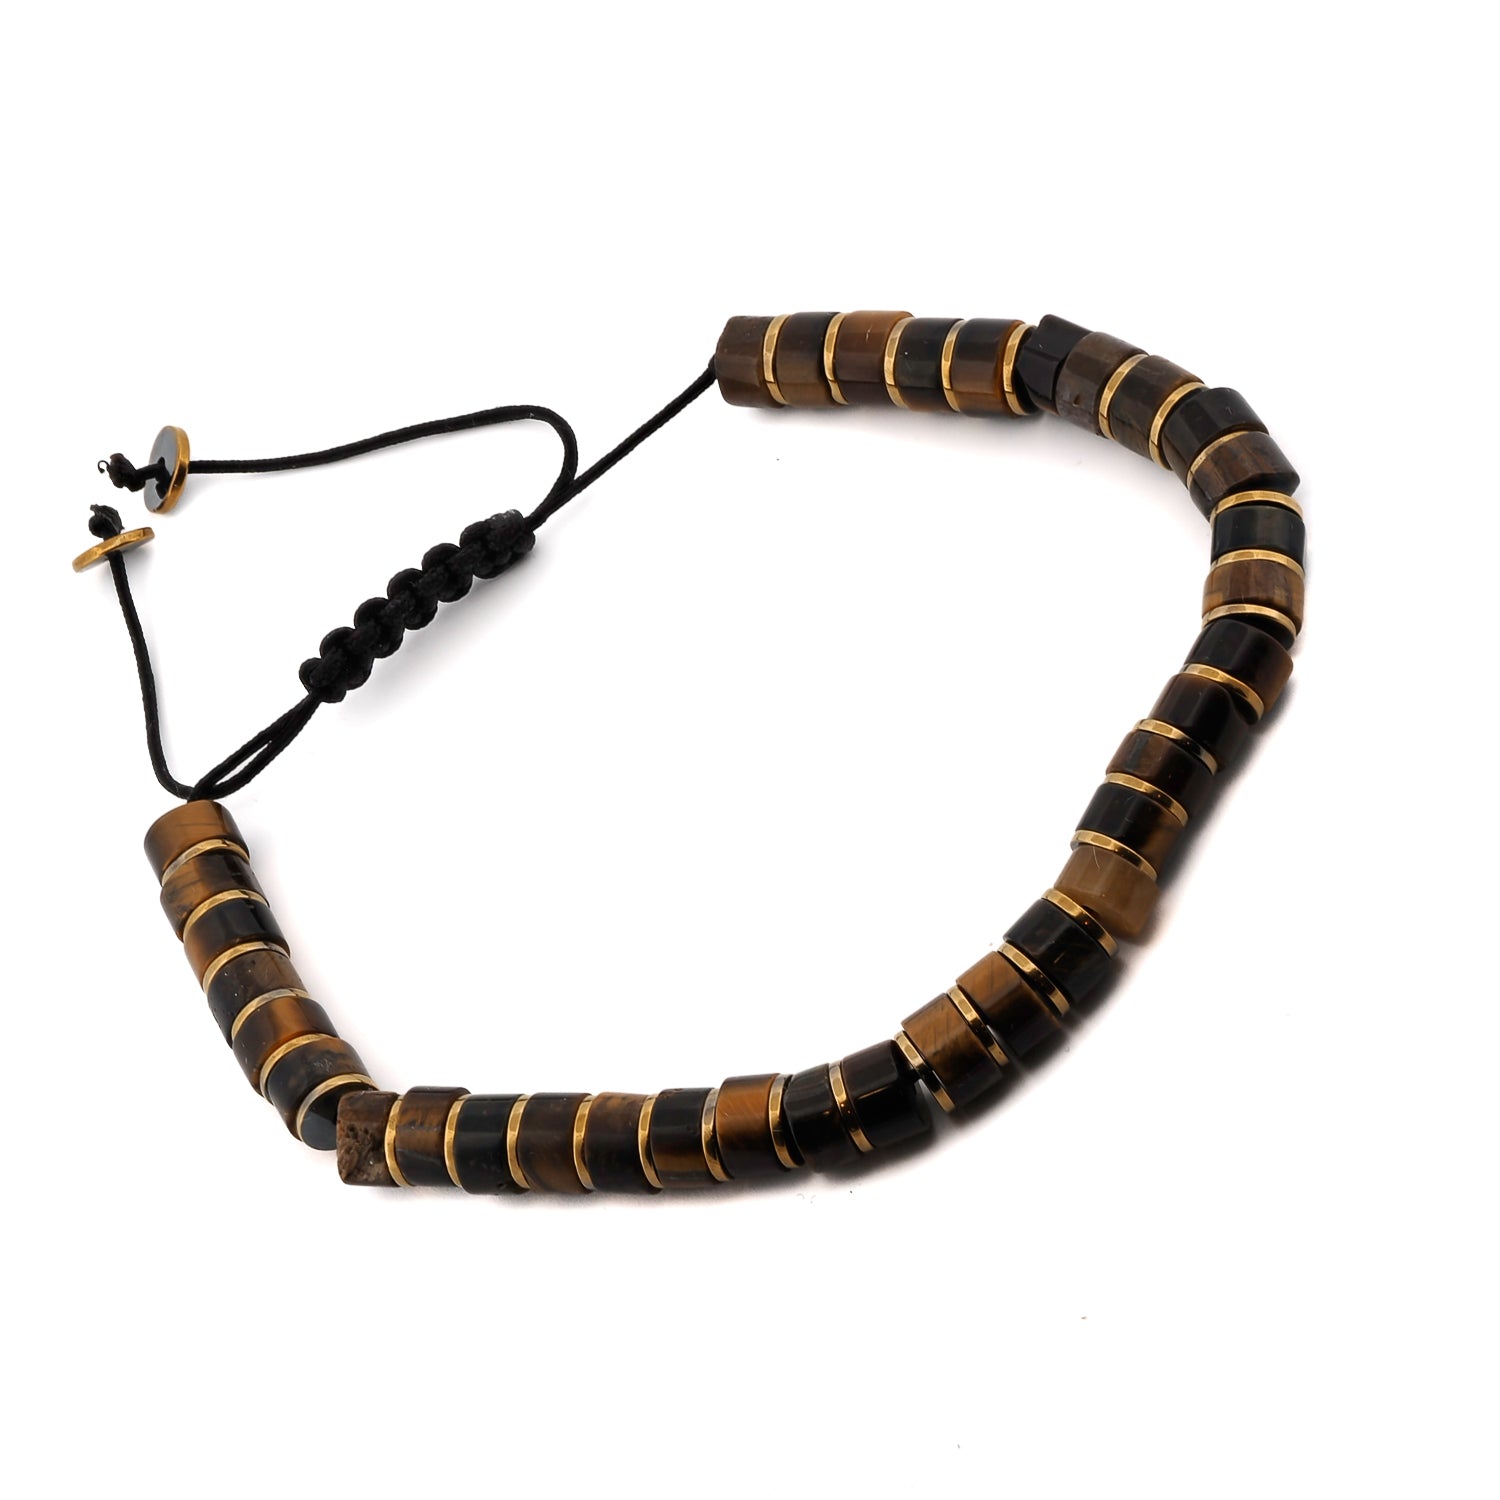 Brown Tiger's Eye Stone Bracelet for Men with Gold Hematite Beads, Adjustable Length